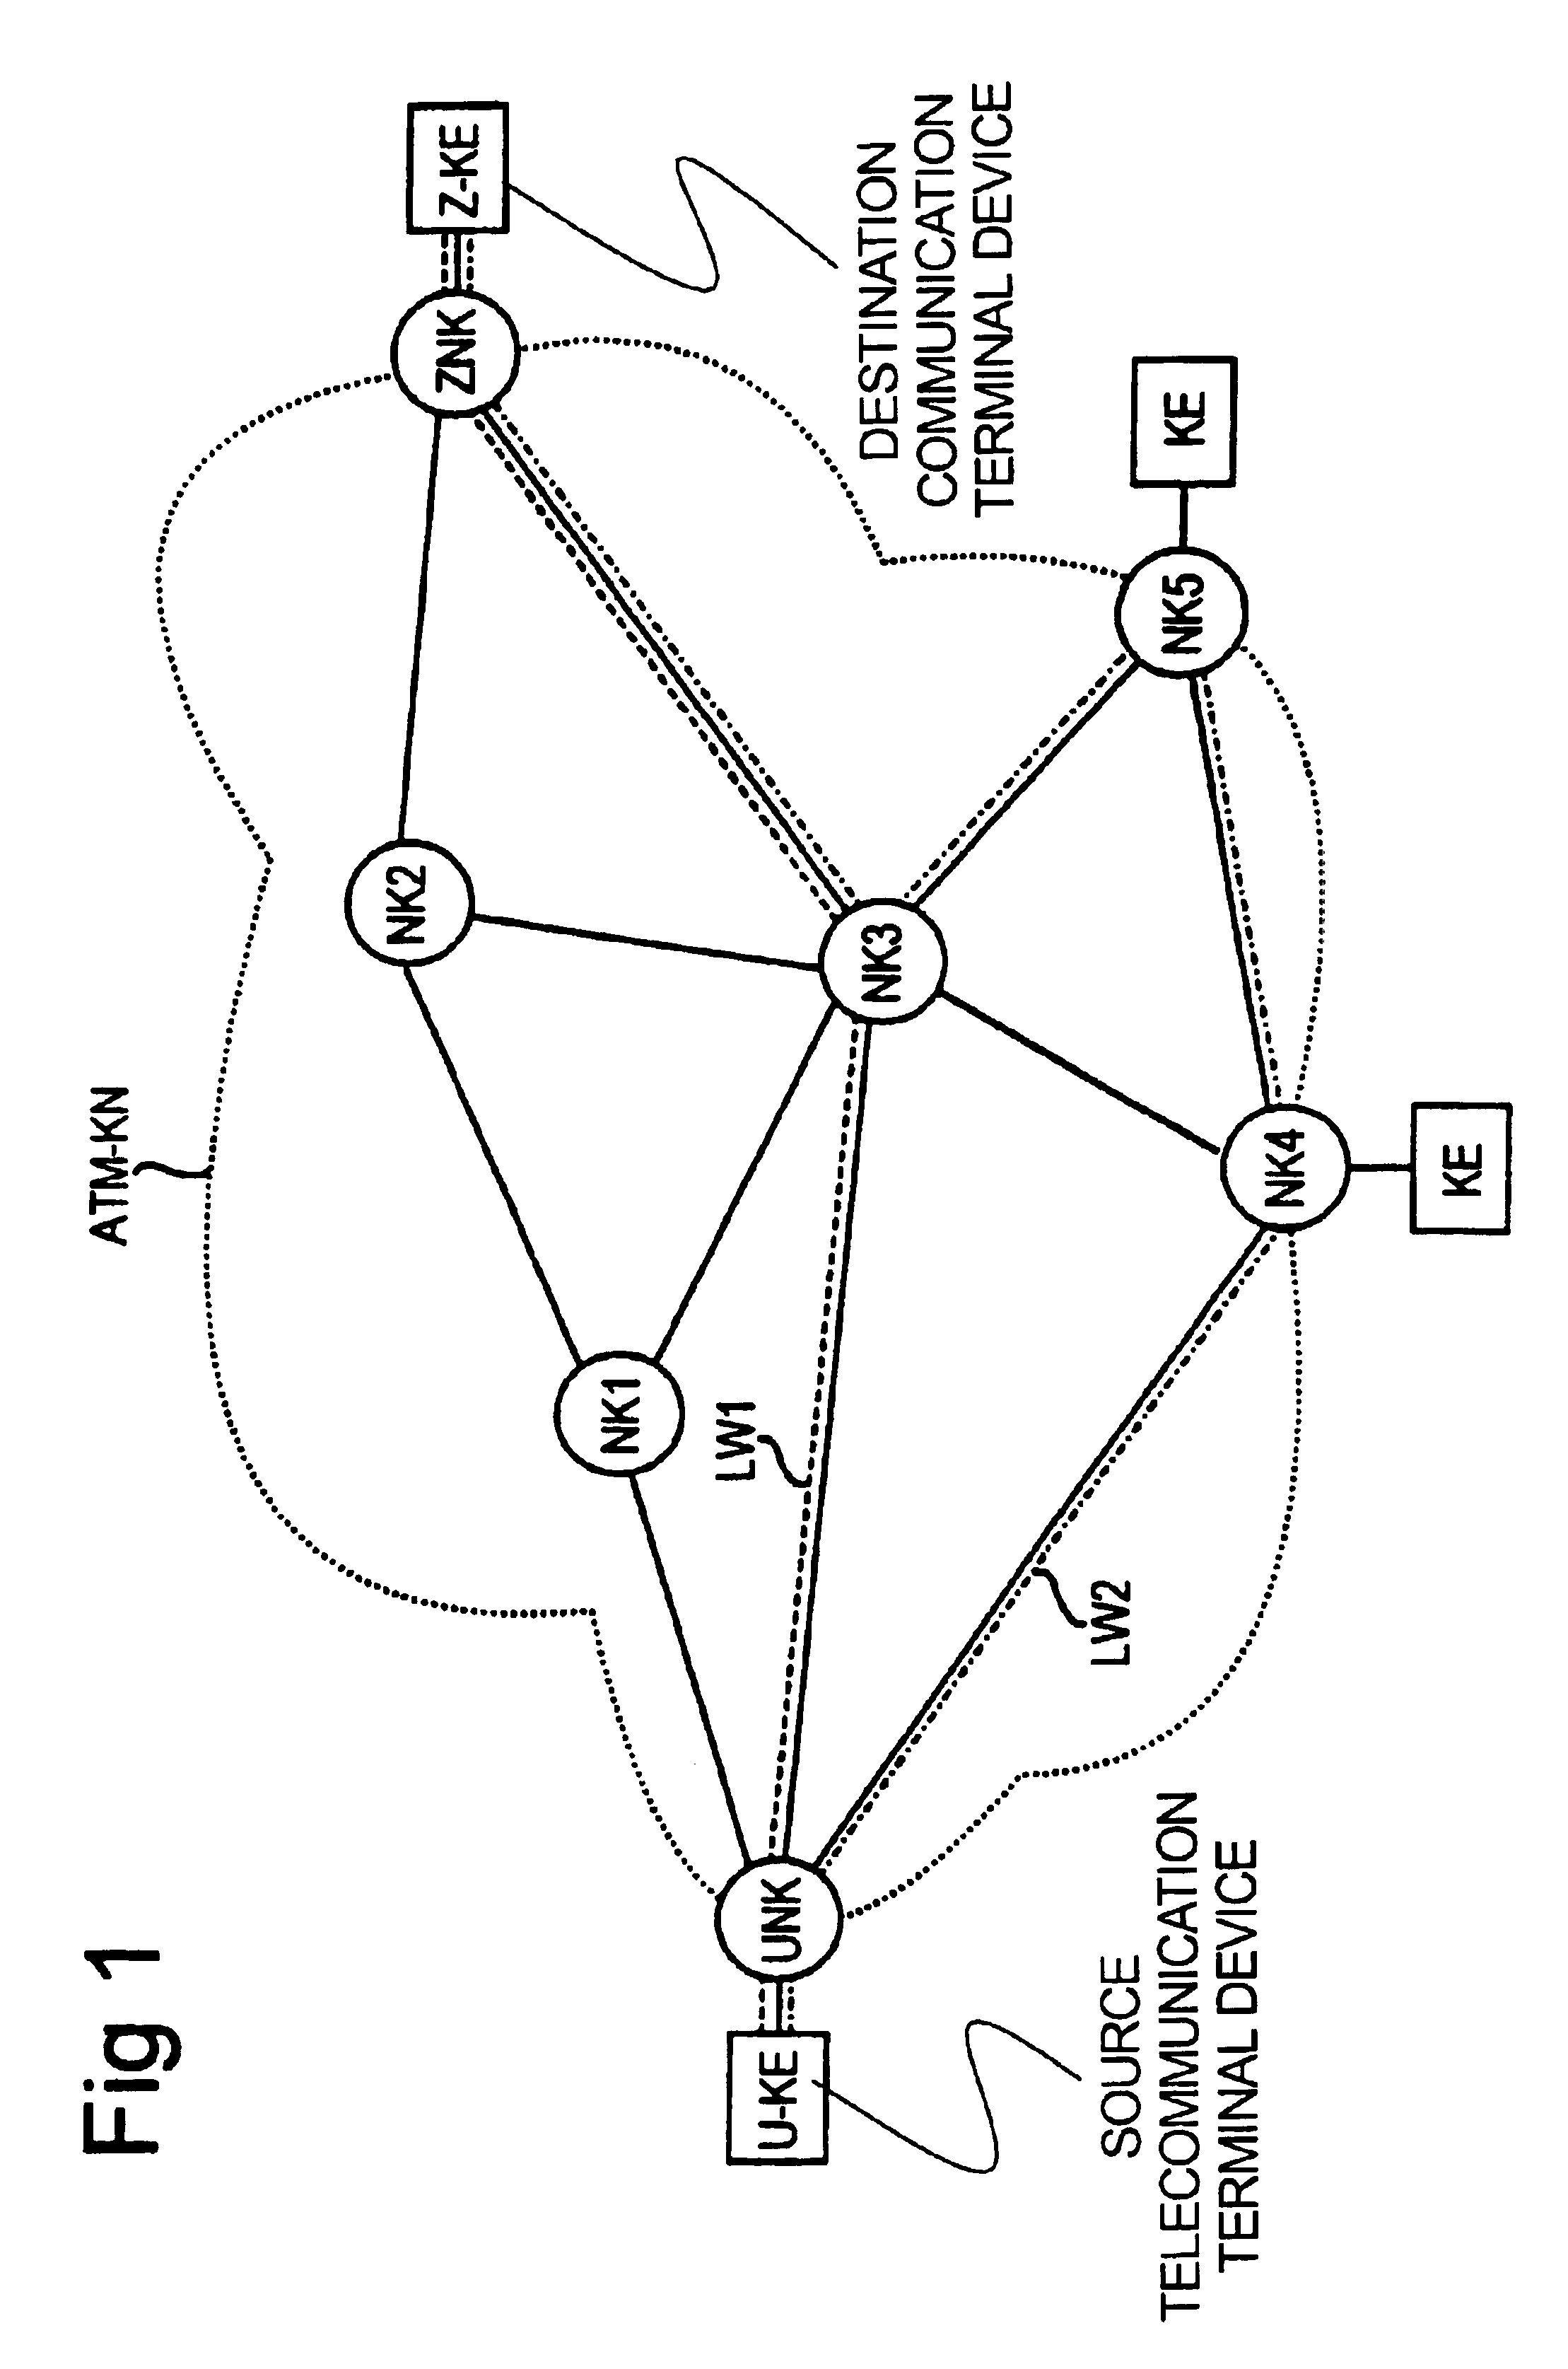 Method for establishing a route via a communications network